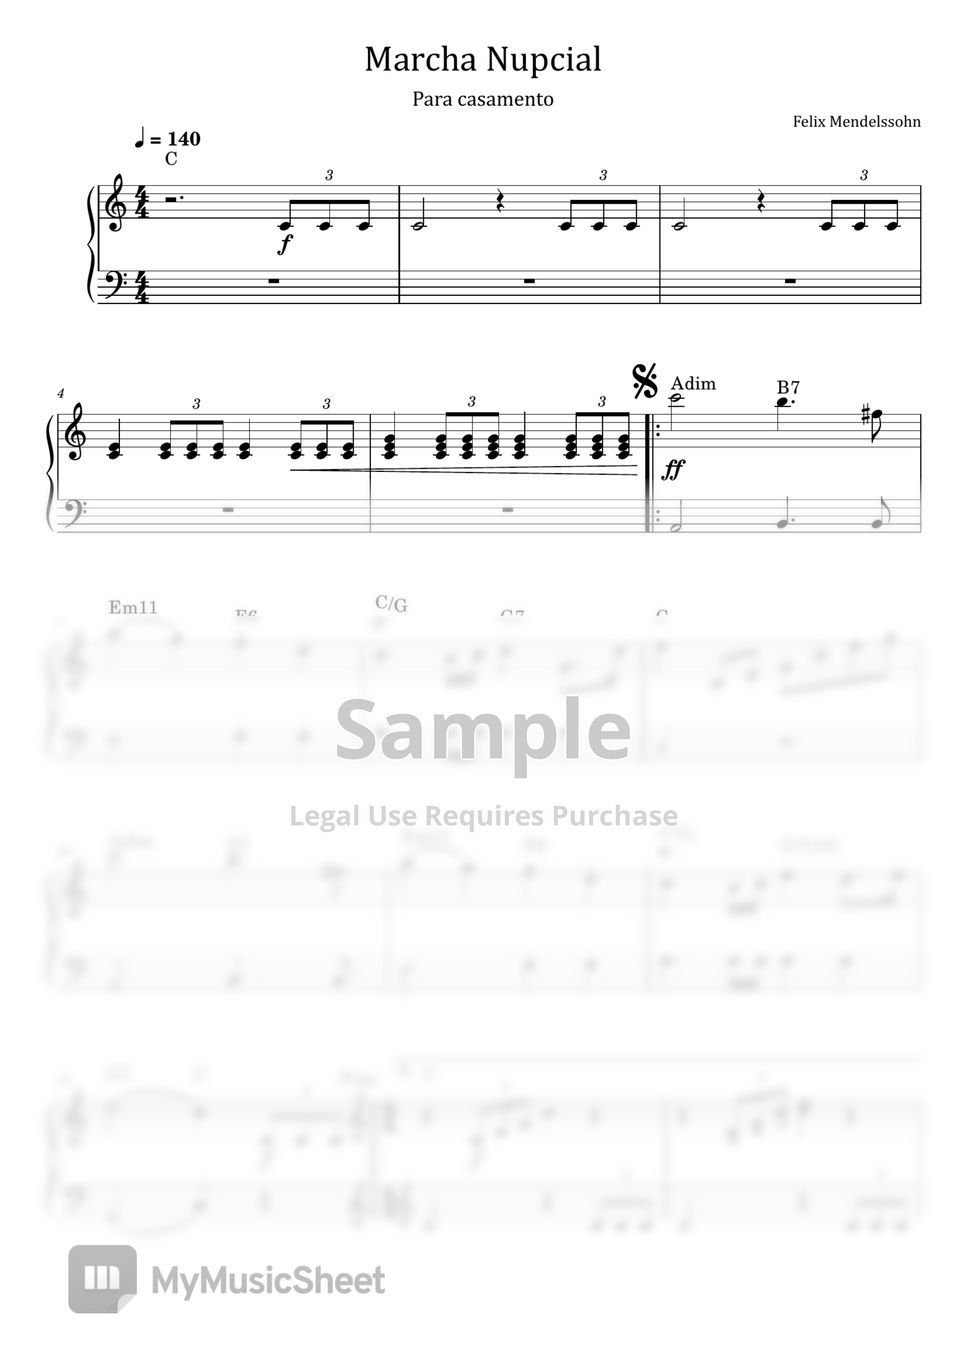 Felix Mendelssohn - Marcha Nupcial - Para casamento (For Easy Piano With Chord) by poon